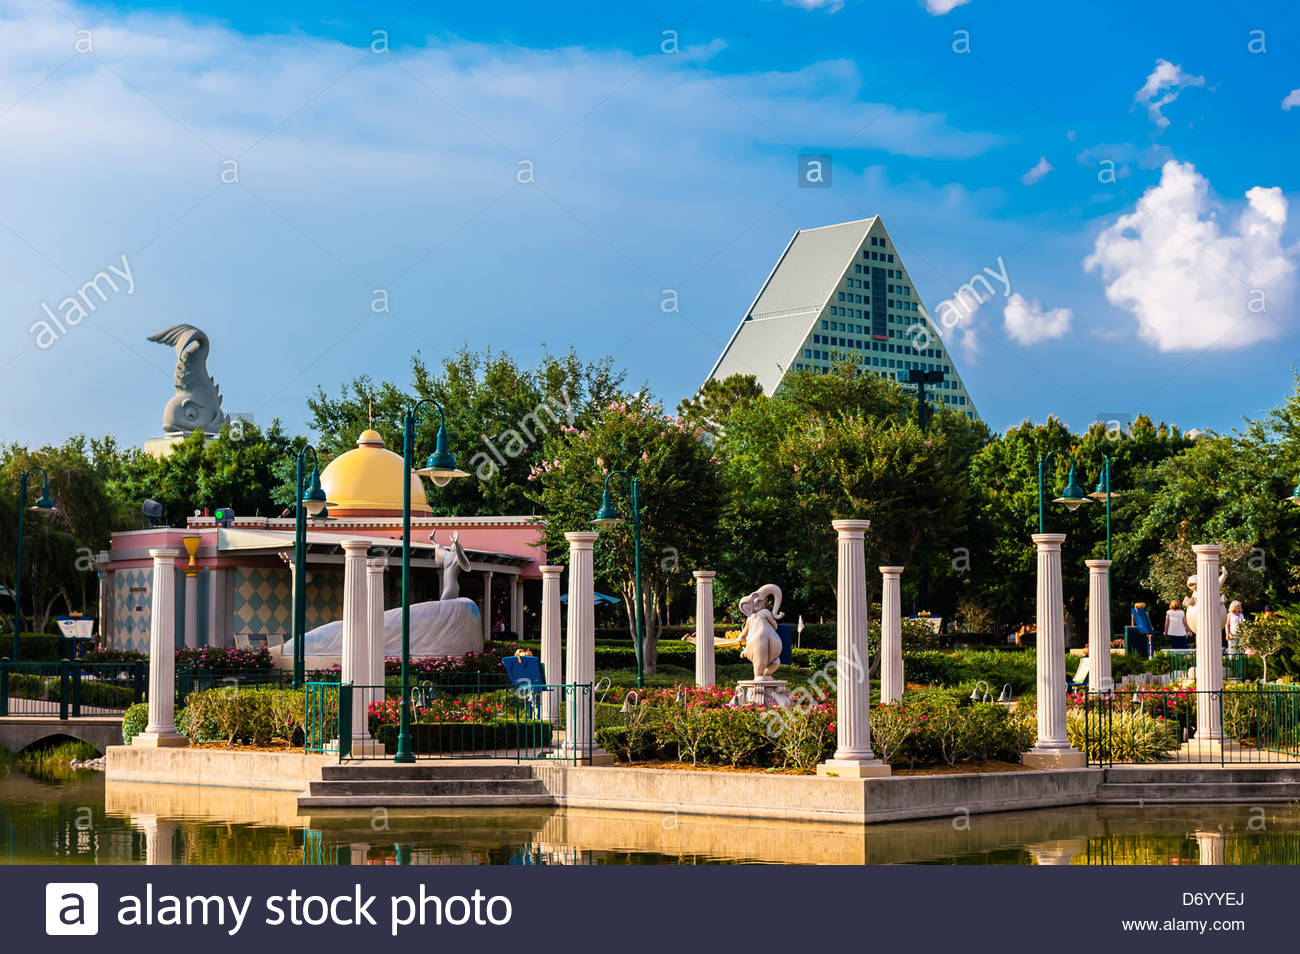 Fantasia Gardens Pavilion With Walt Disney World Swan And Dolphin